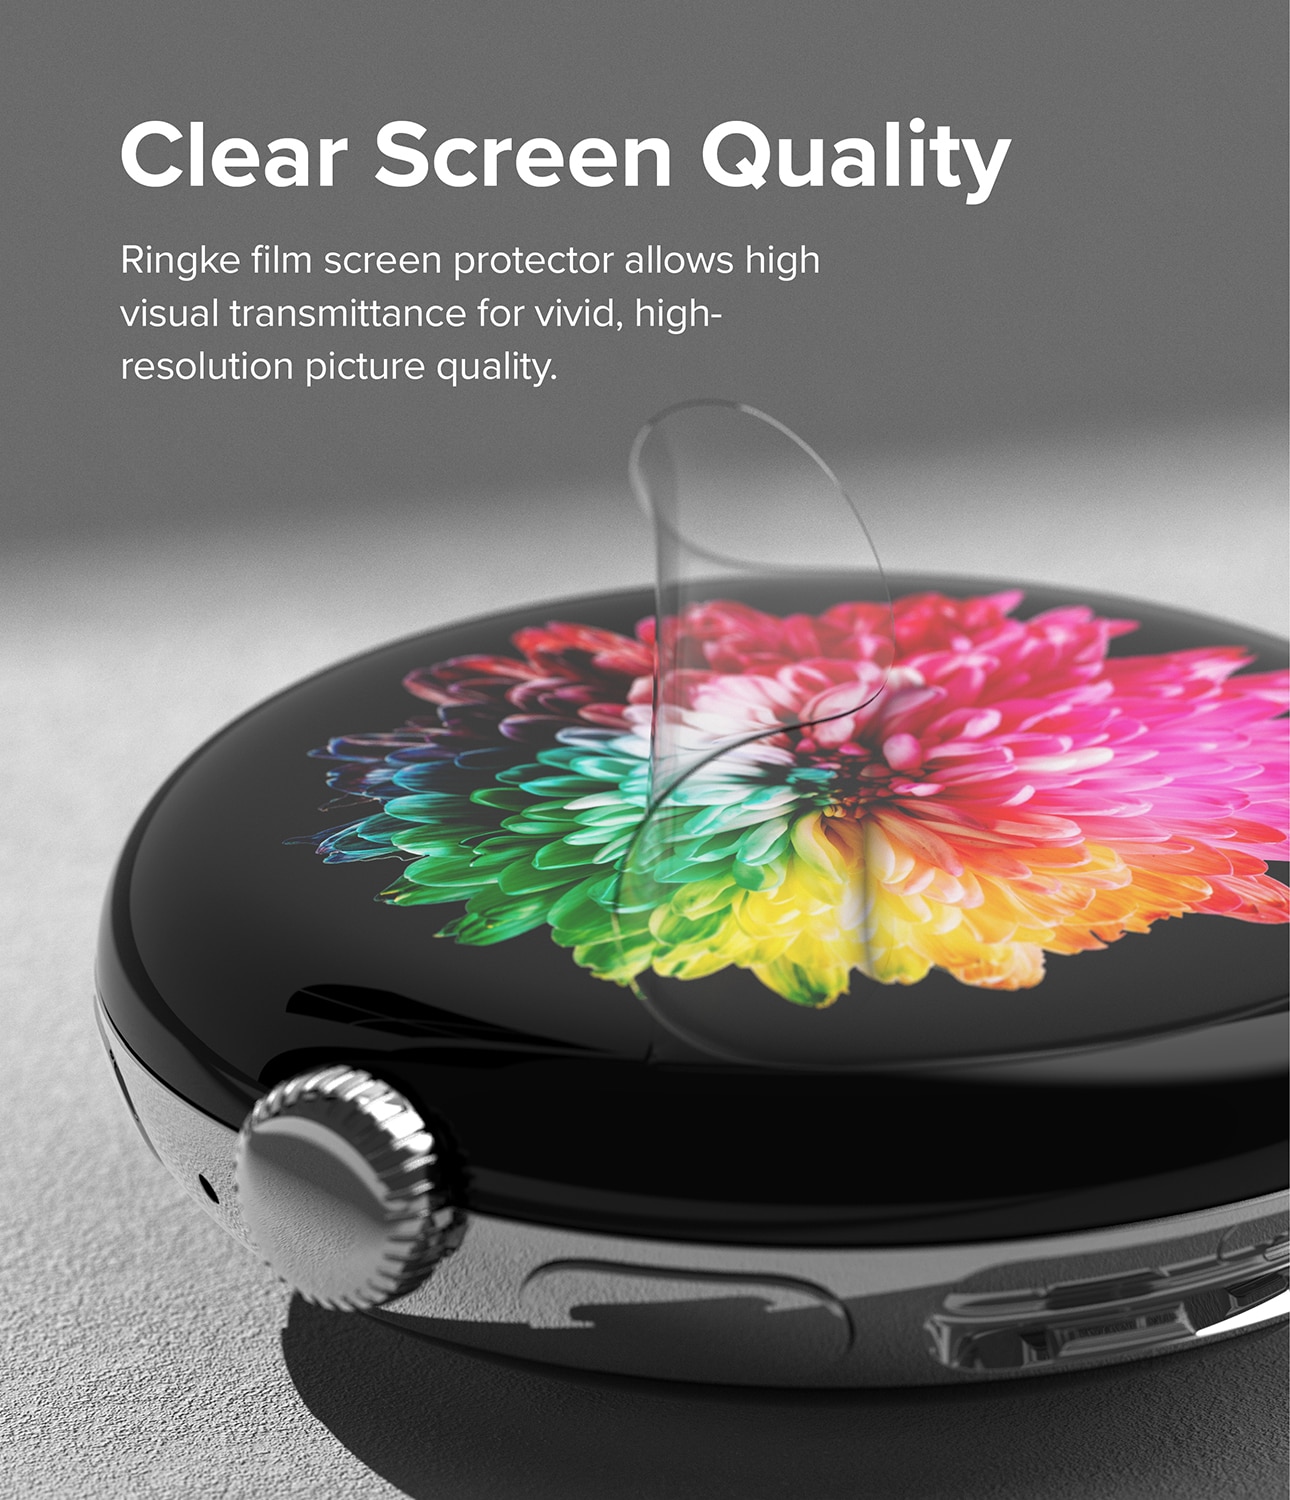 Dual Easy Screen Protector (3 Stück) Google Pixel Watch 2